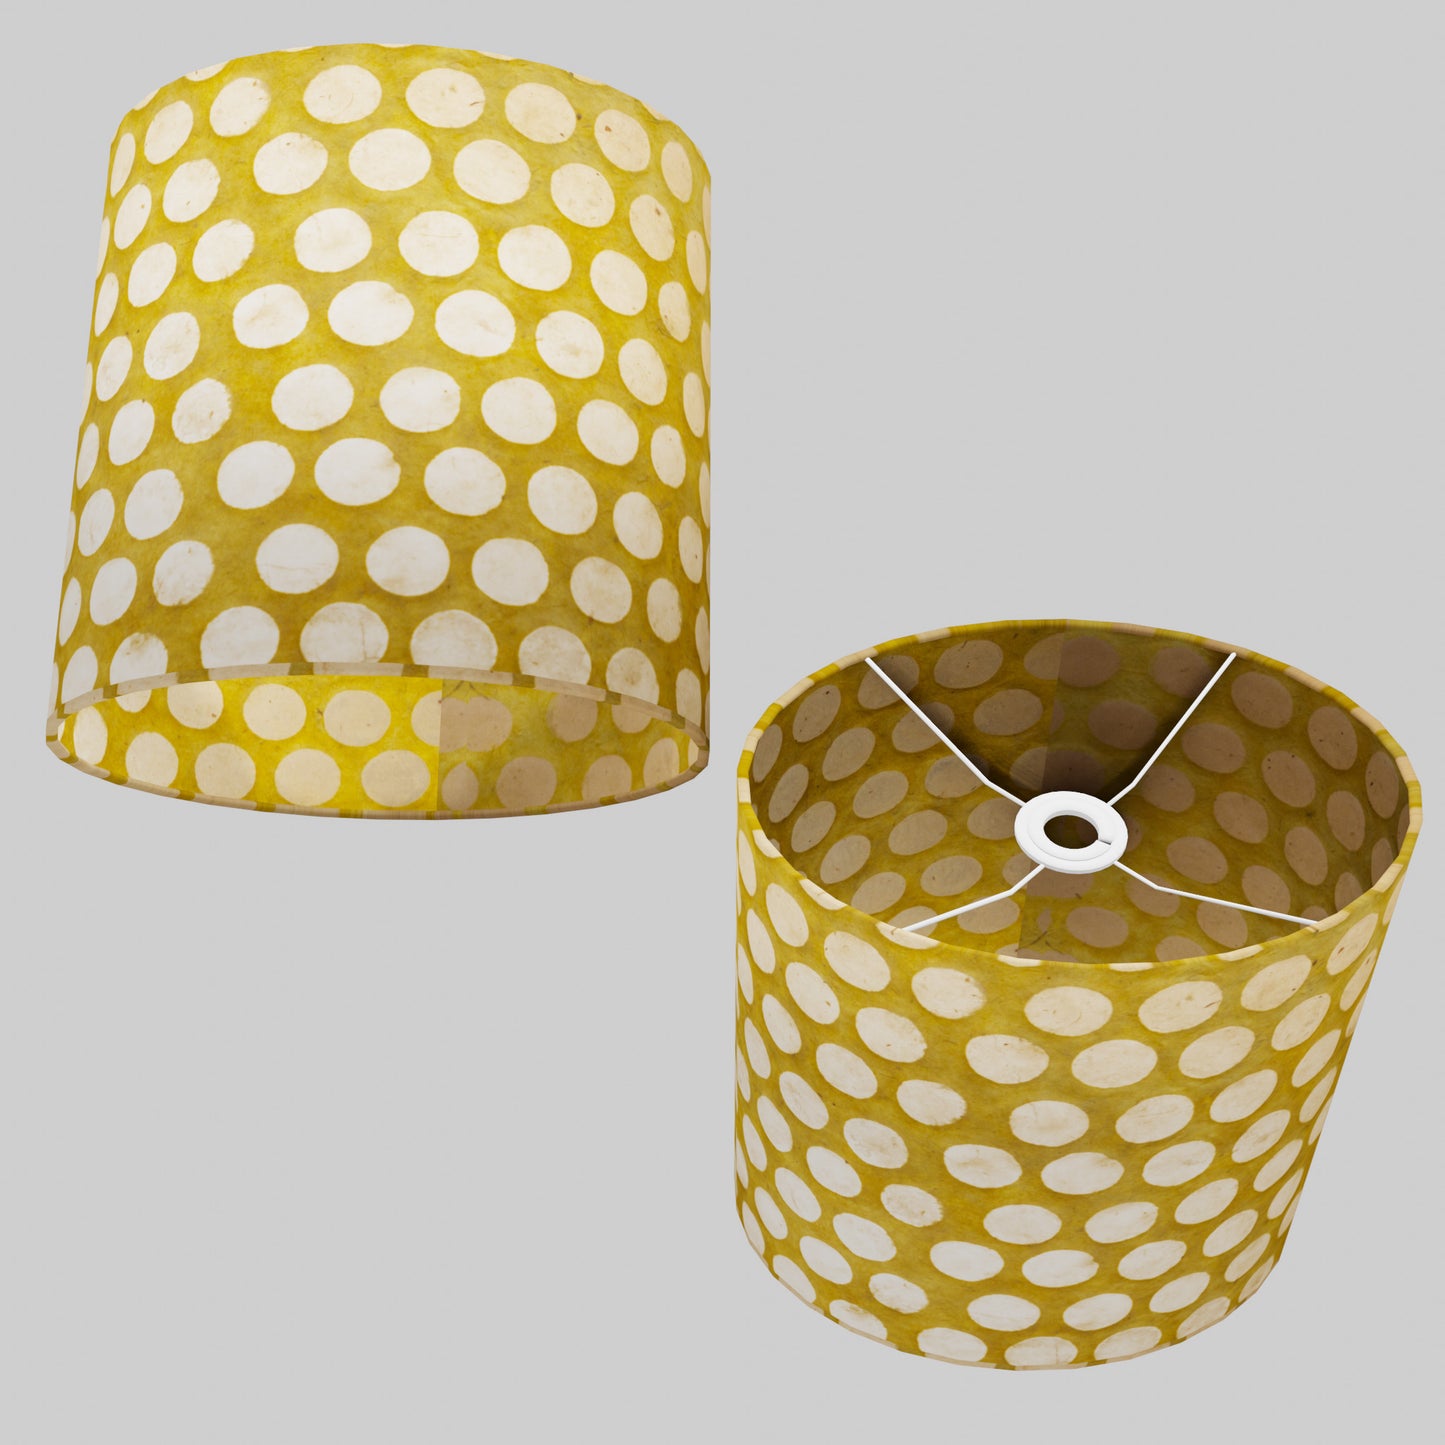 Oval Lamp Shade - P86 ~ Batik Dots on Yellow, 30cm(w) x 30cm(h) x 22cm(d)